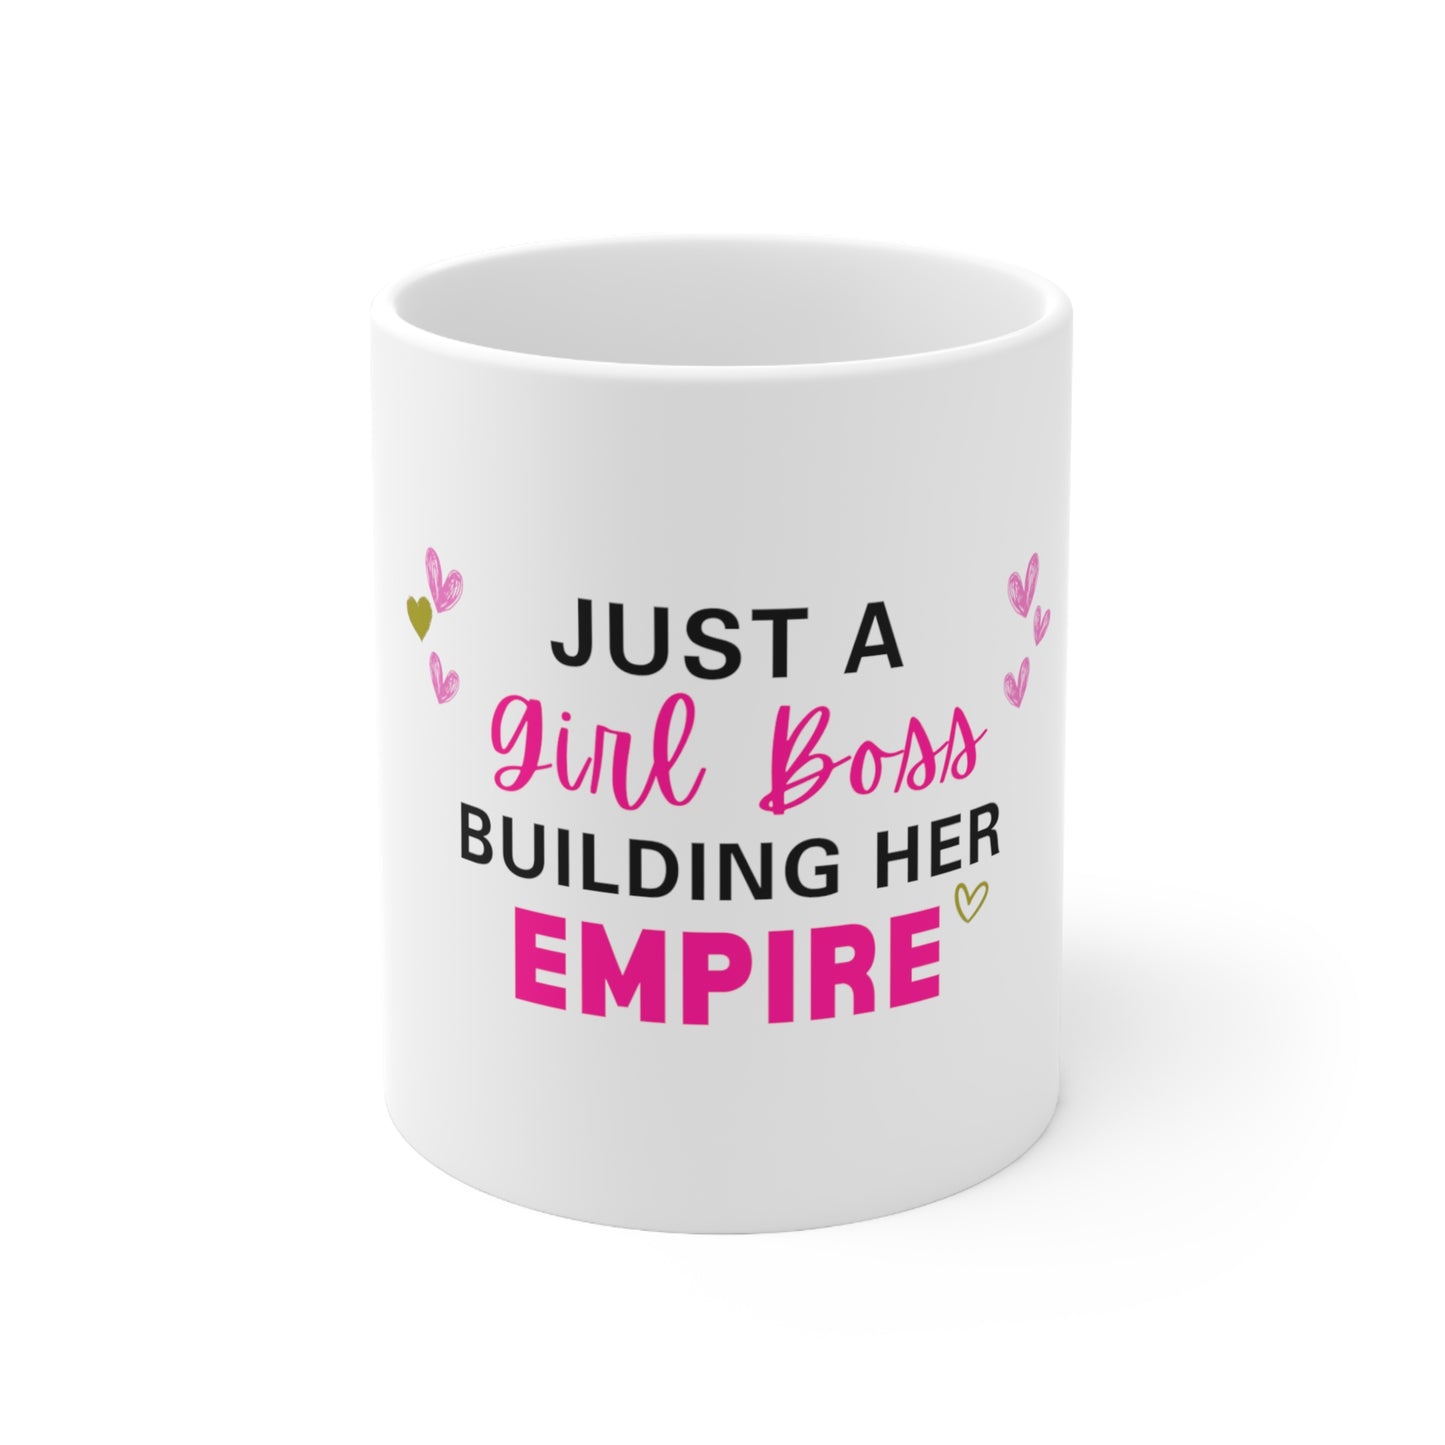 "Just a Girl Boss" Ceramic Mug - 11oz